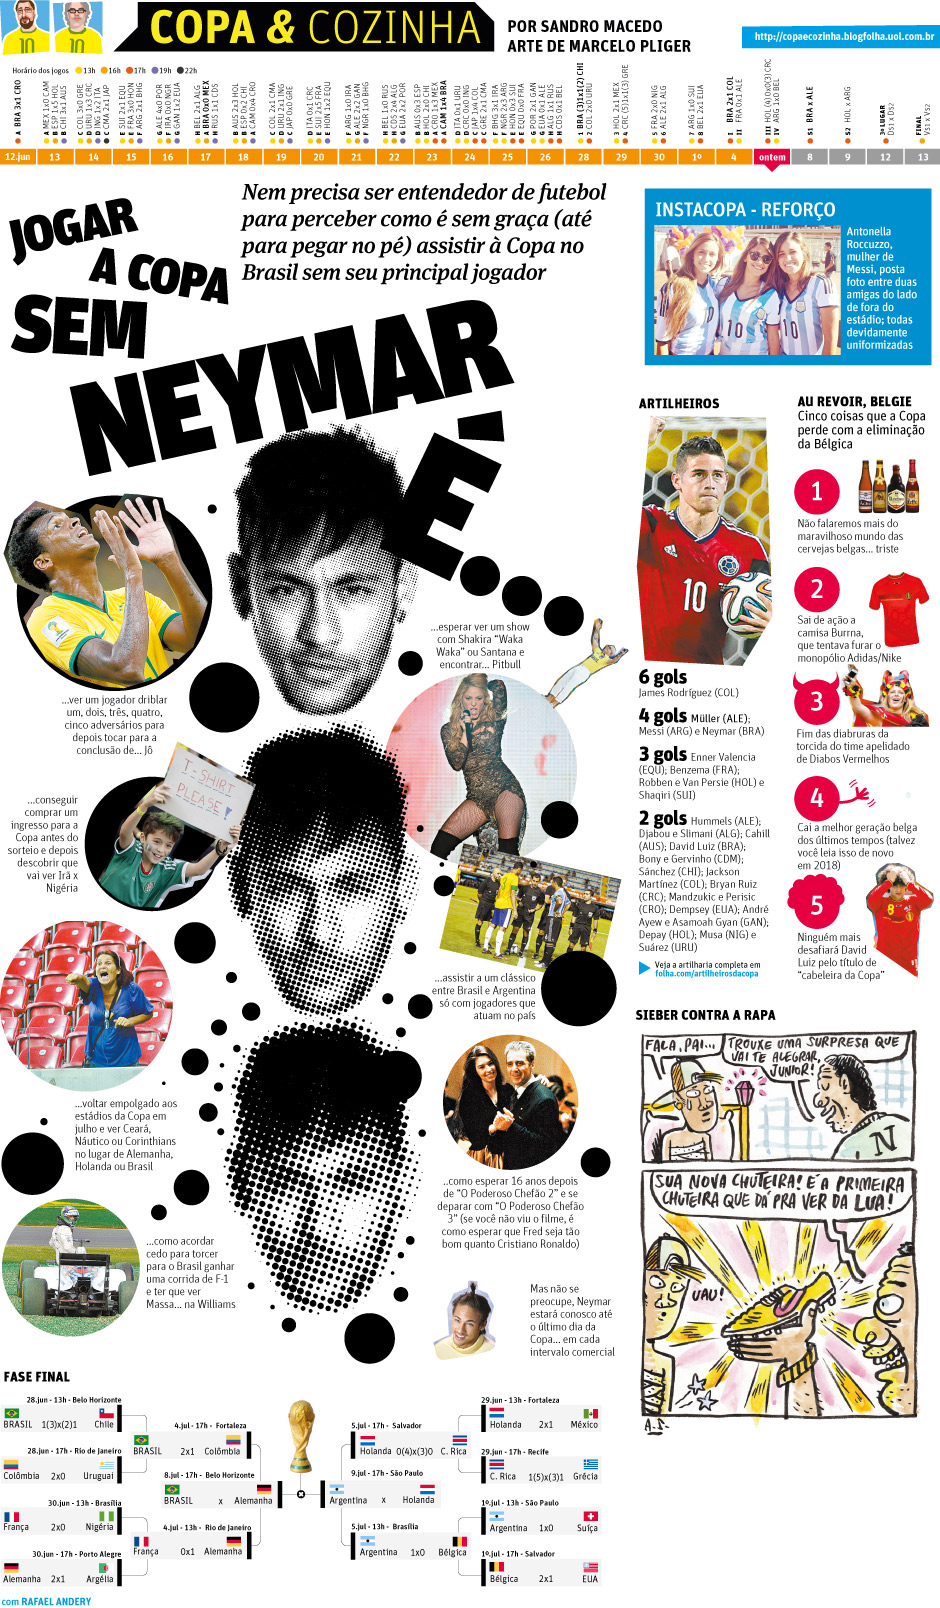 Copa & cozinha - Jogar a Copa sem Neymar ...